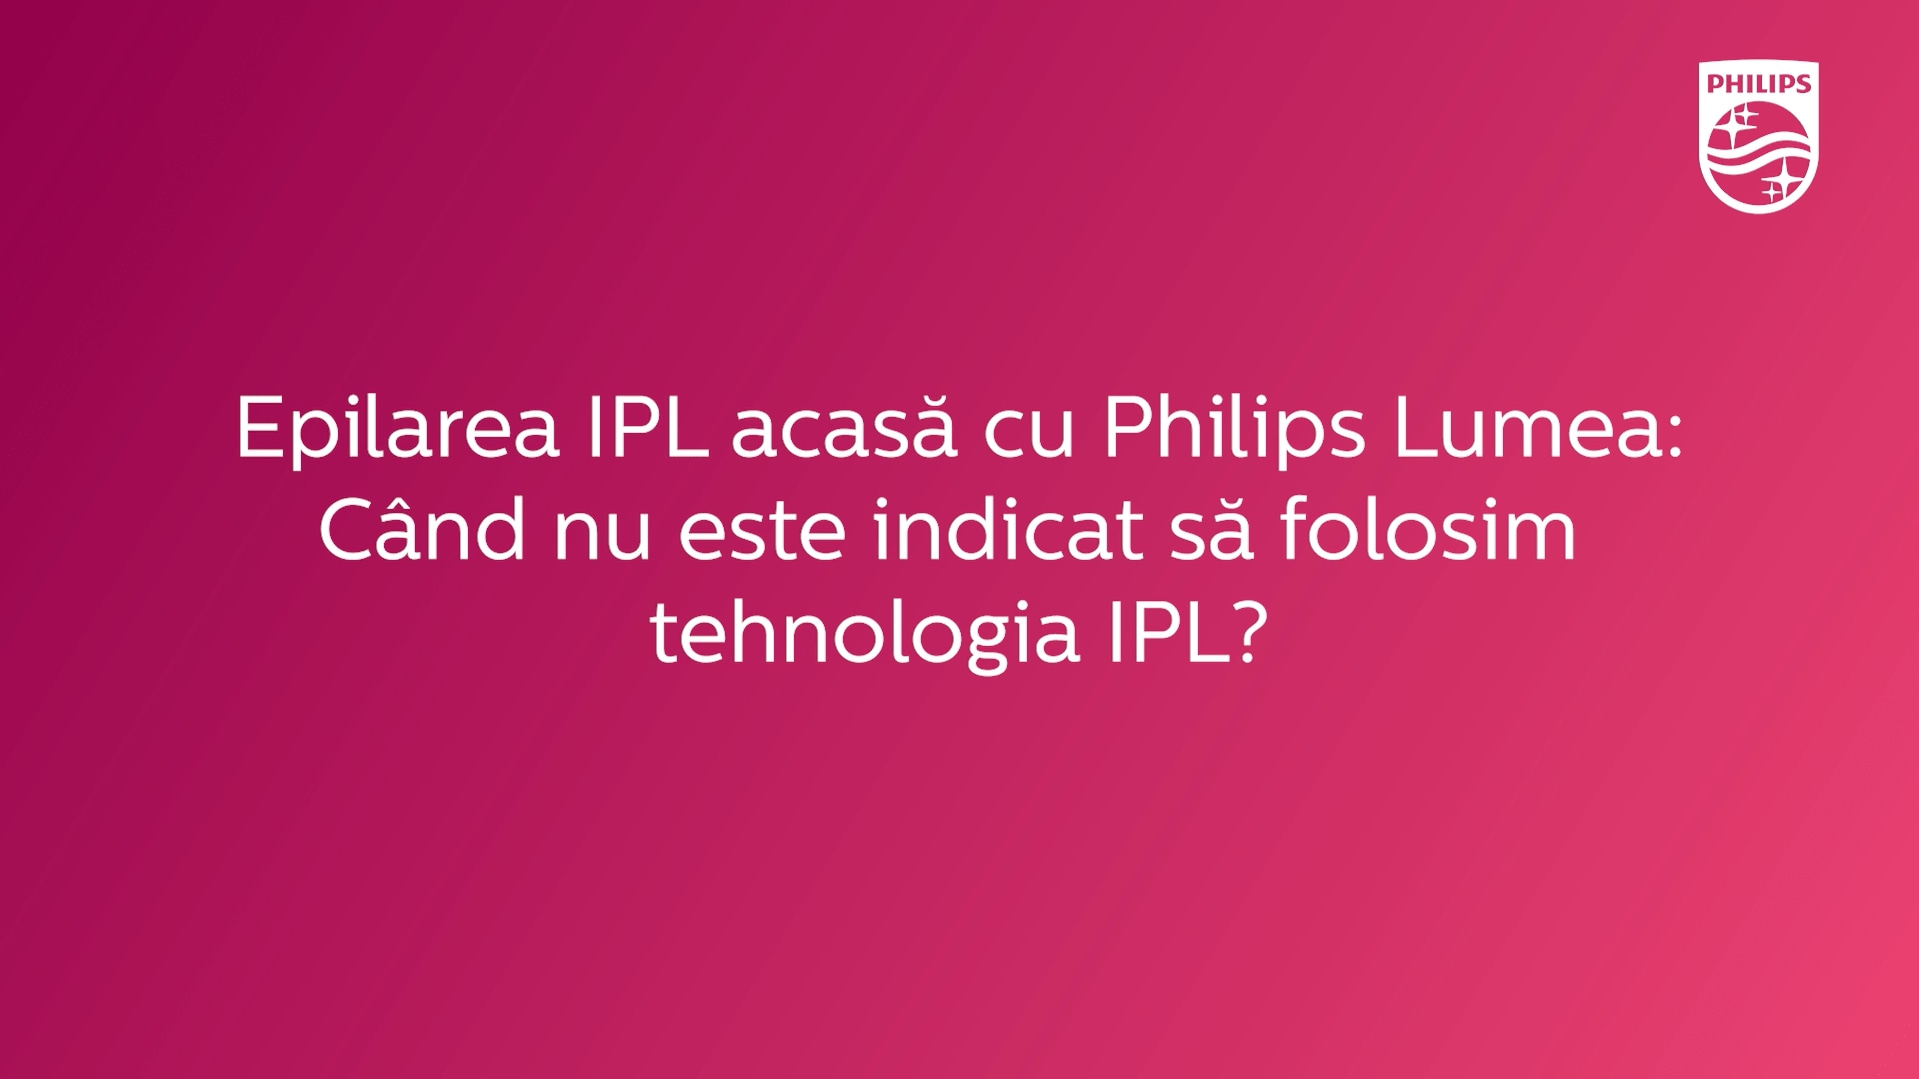 Cand nu este indicat sa folosim tehnologia IPL?